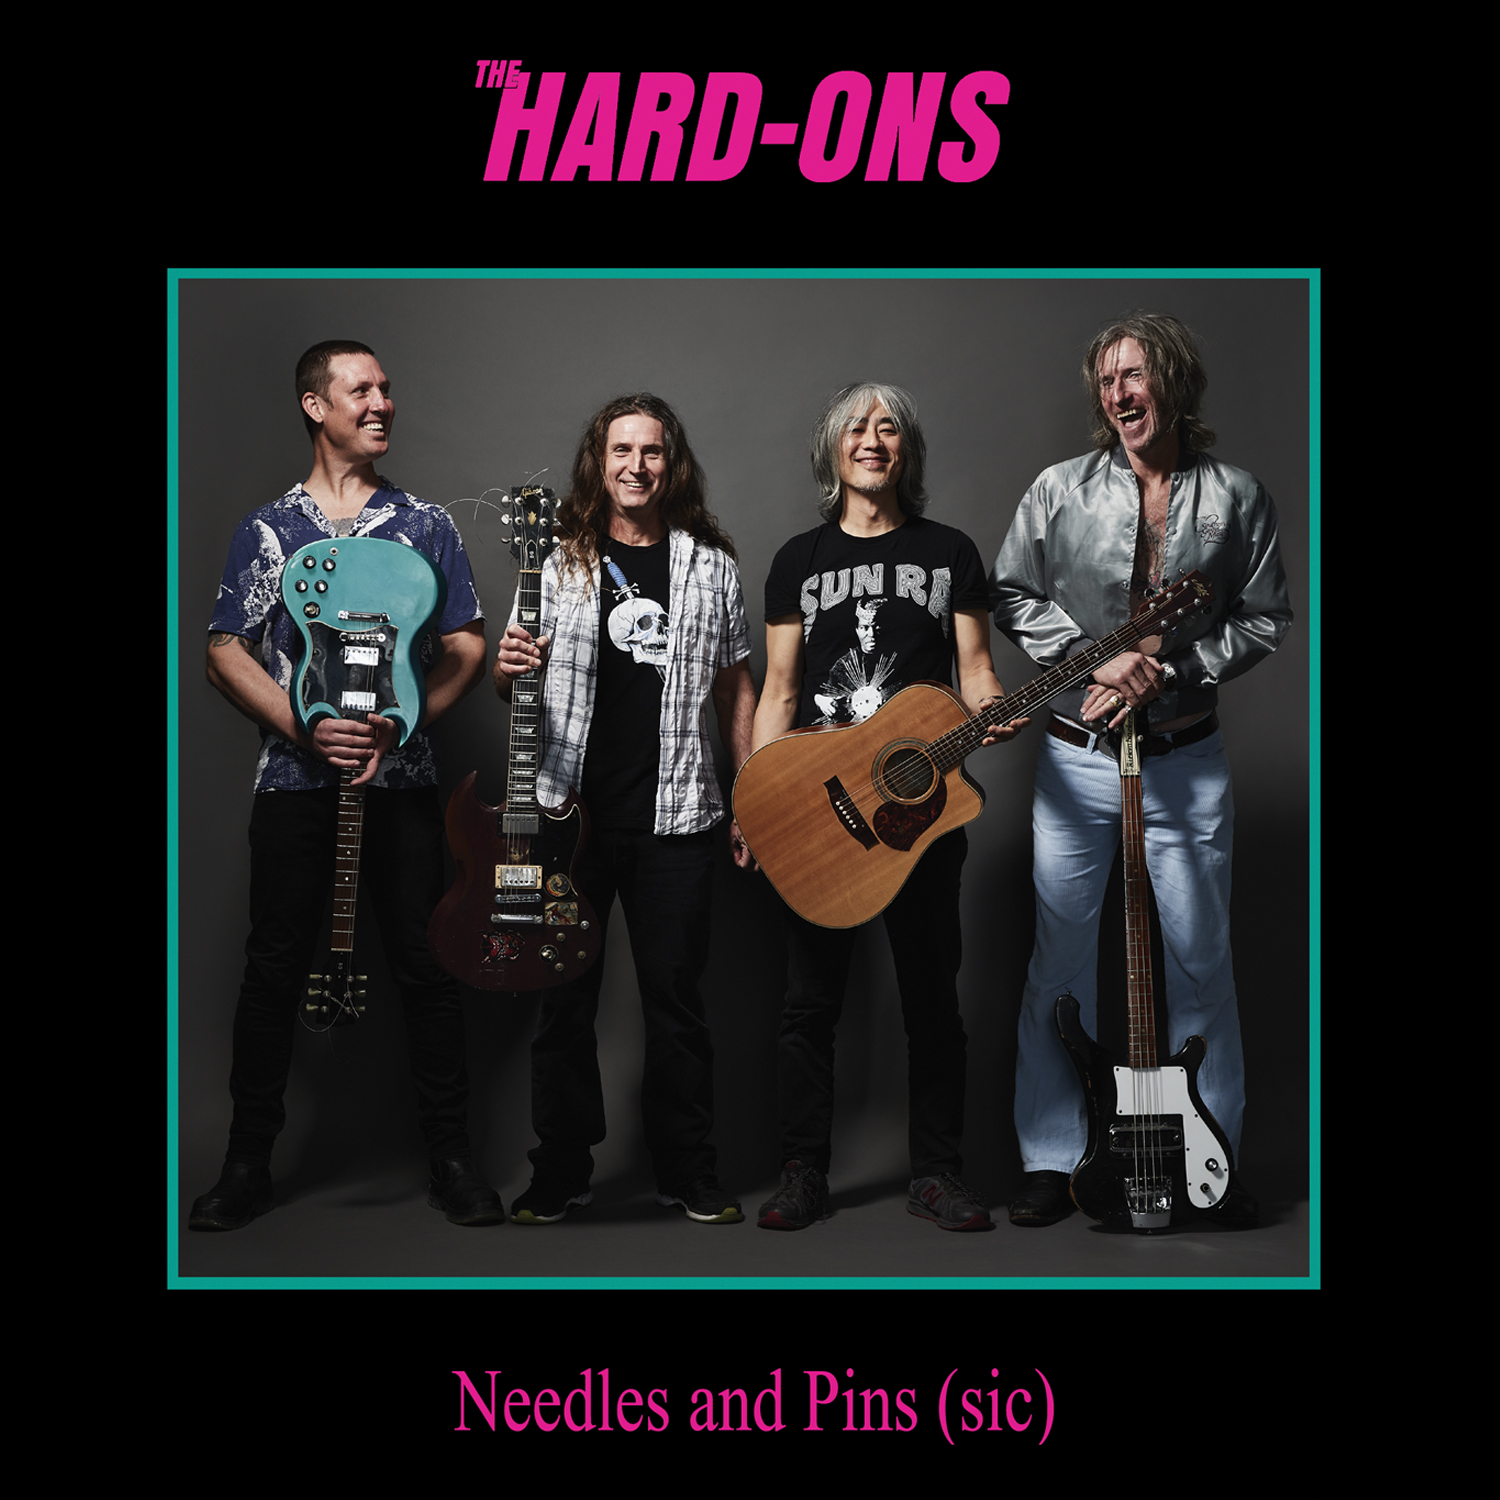 The Hard-Ons - Needles and Pins (sic)